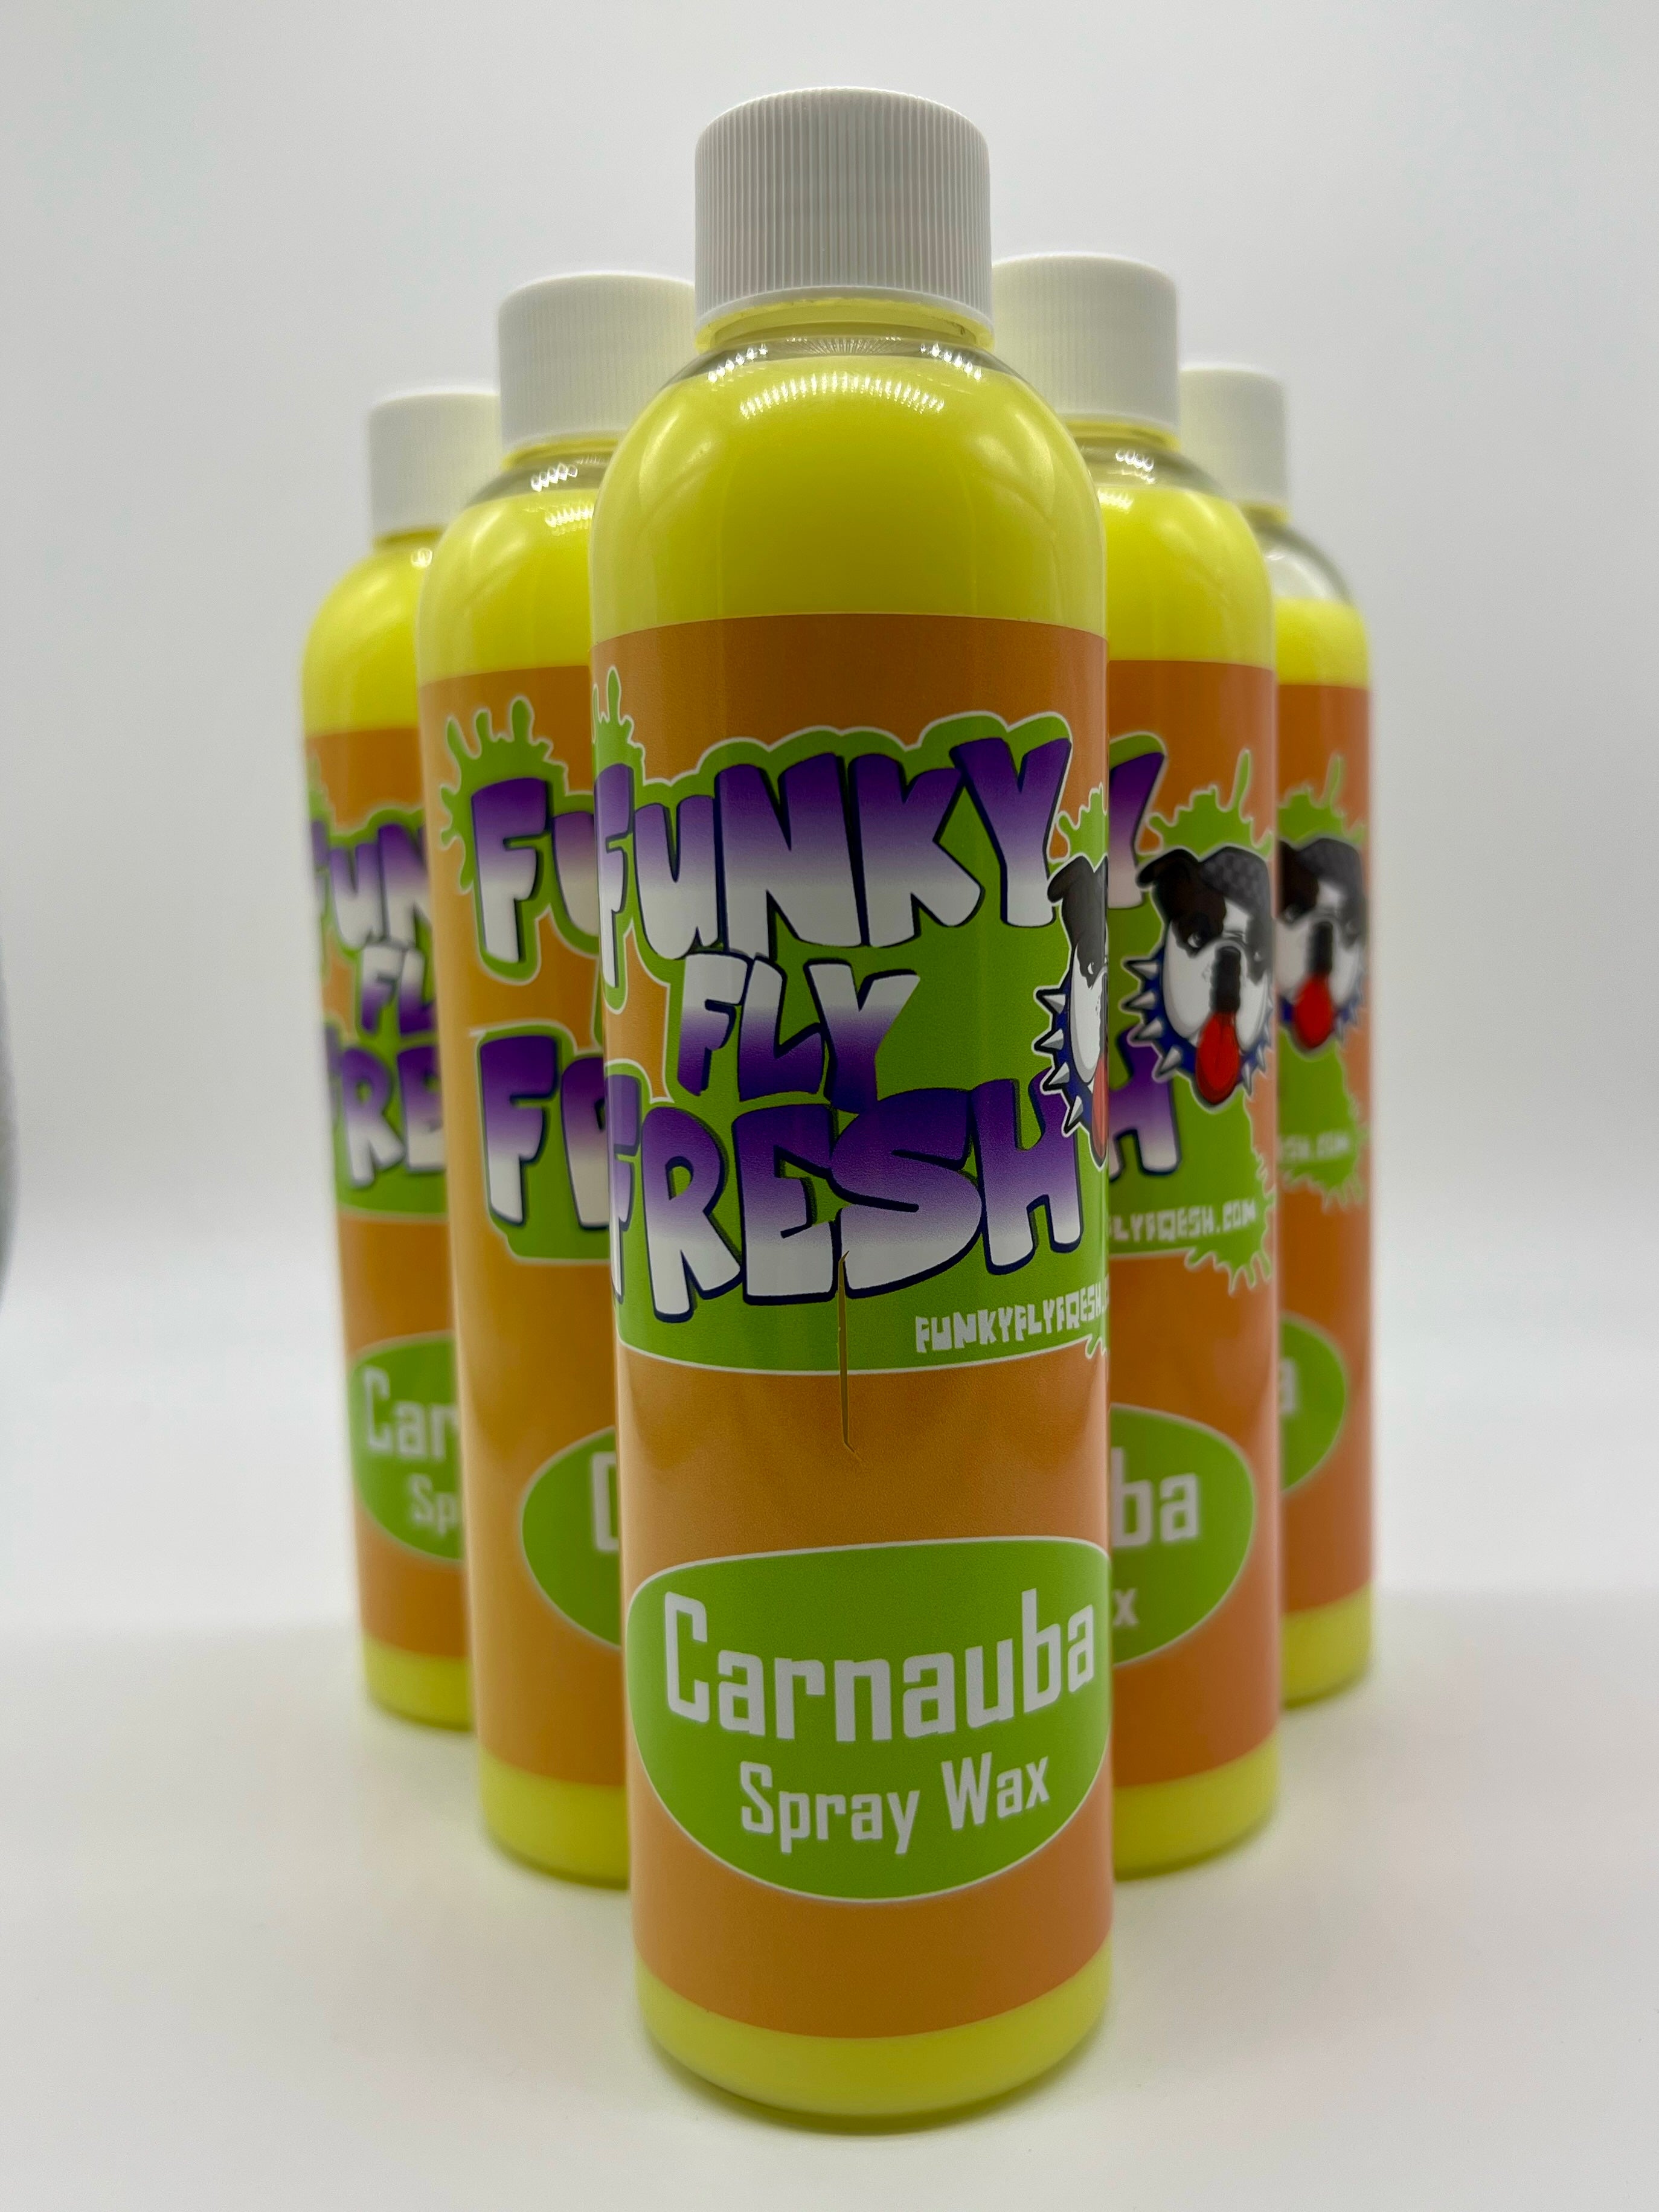 Carnauba Spray Wax – Funky Fly Fresh